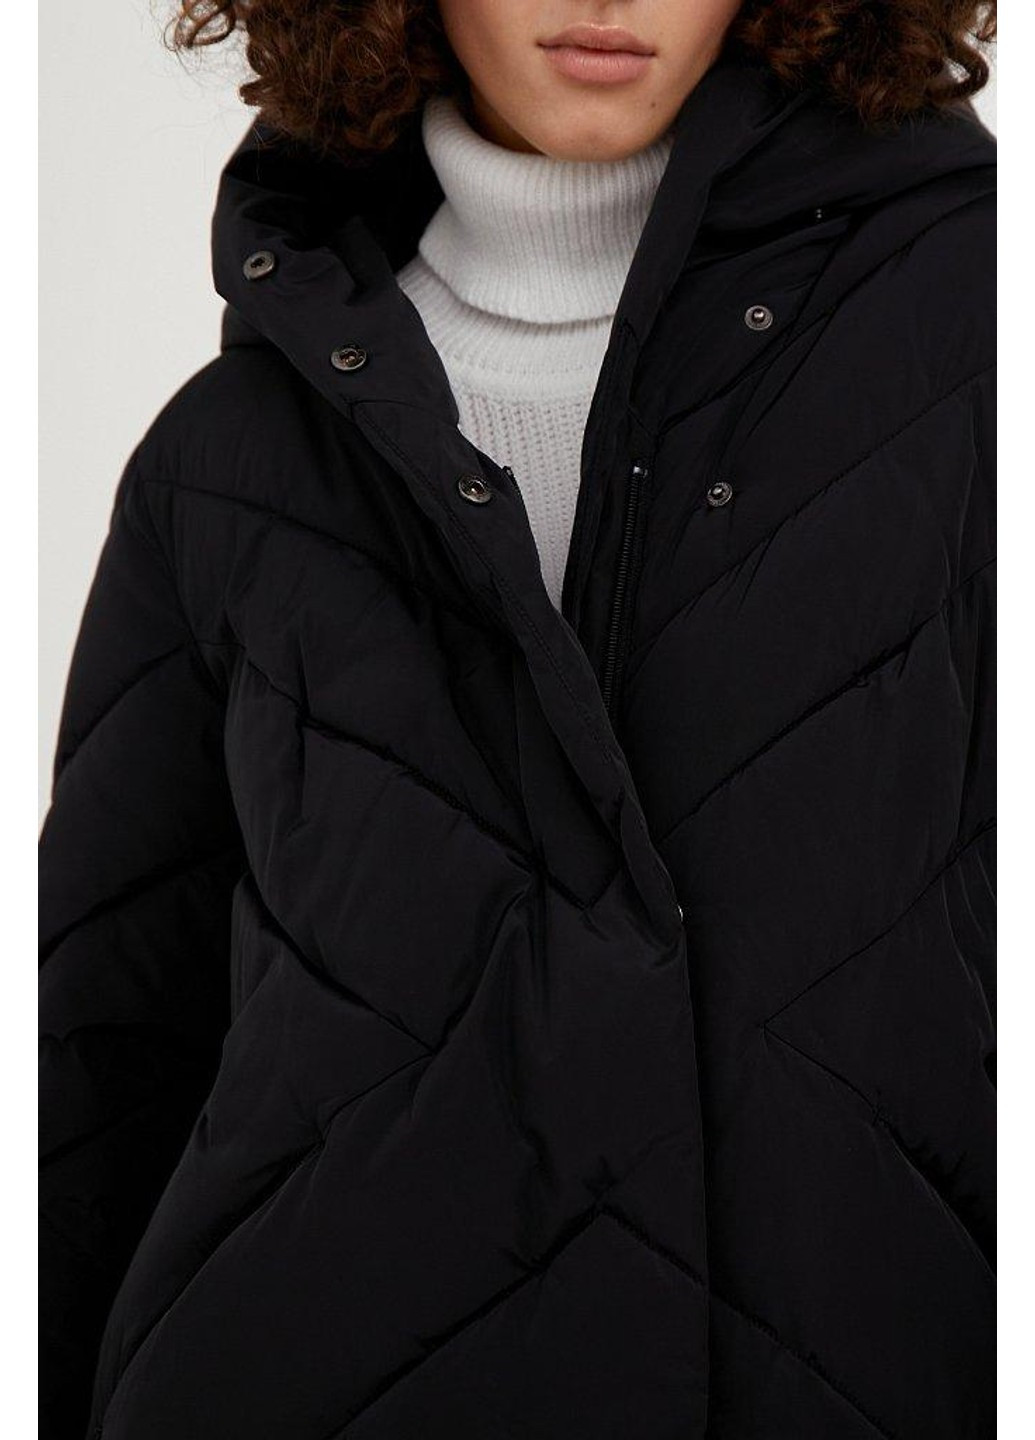 Чорна зимня зимове пальто a20-11005-200 Finn Flare